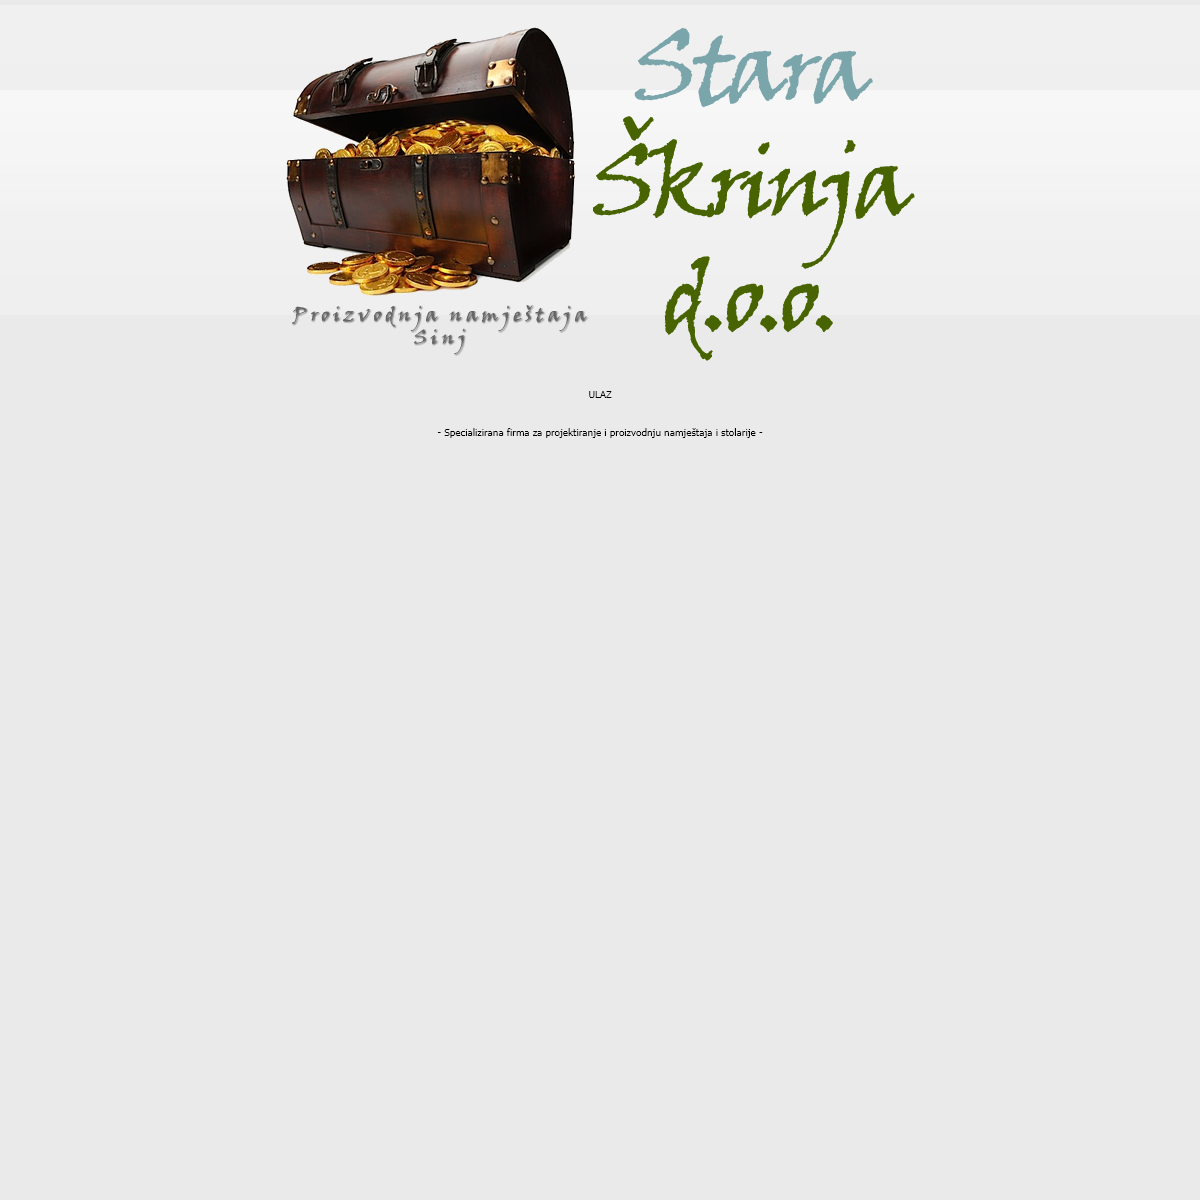 A complete backup of stara-skrinja.com